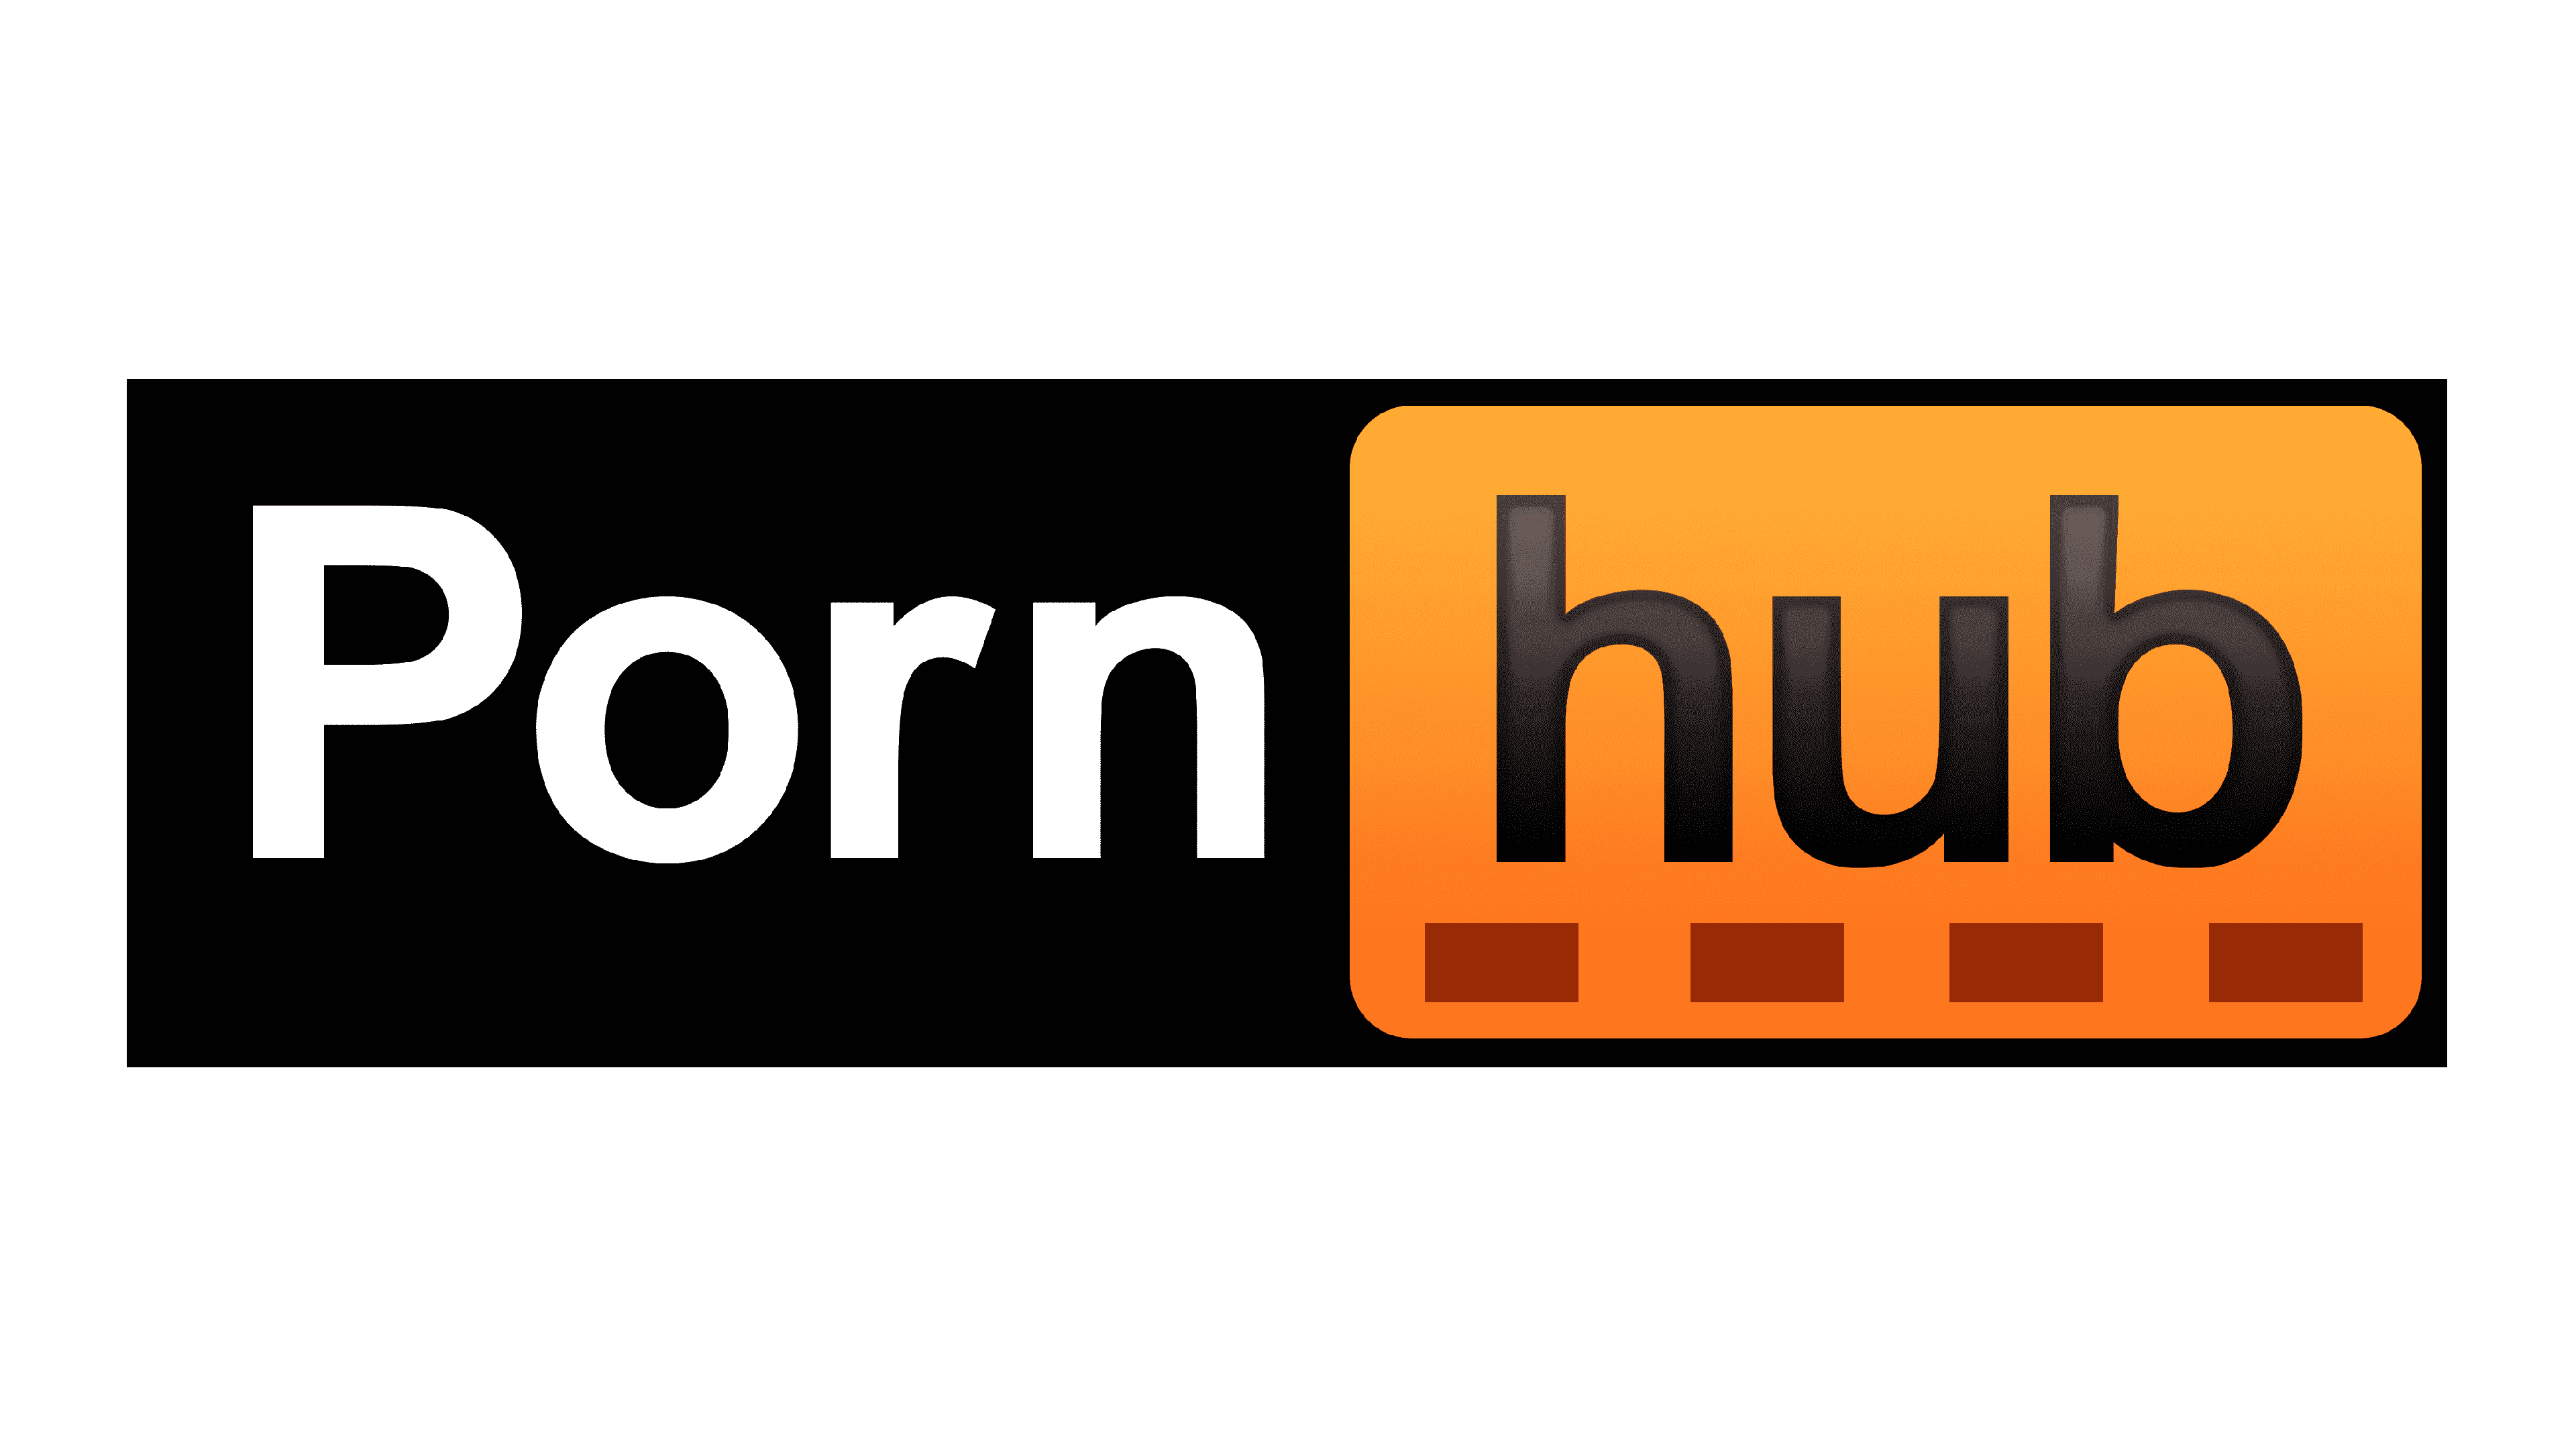 Pronhun - Pornhub Logo and symbol, meaning, history, PNG, new